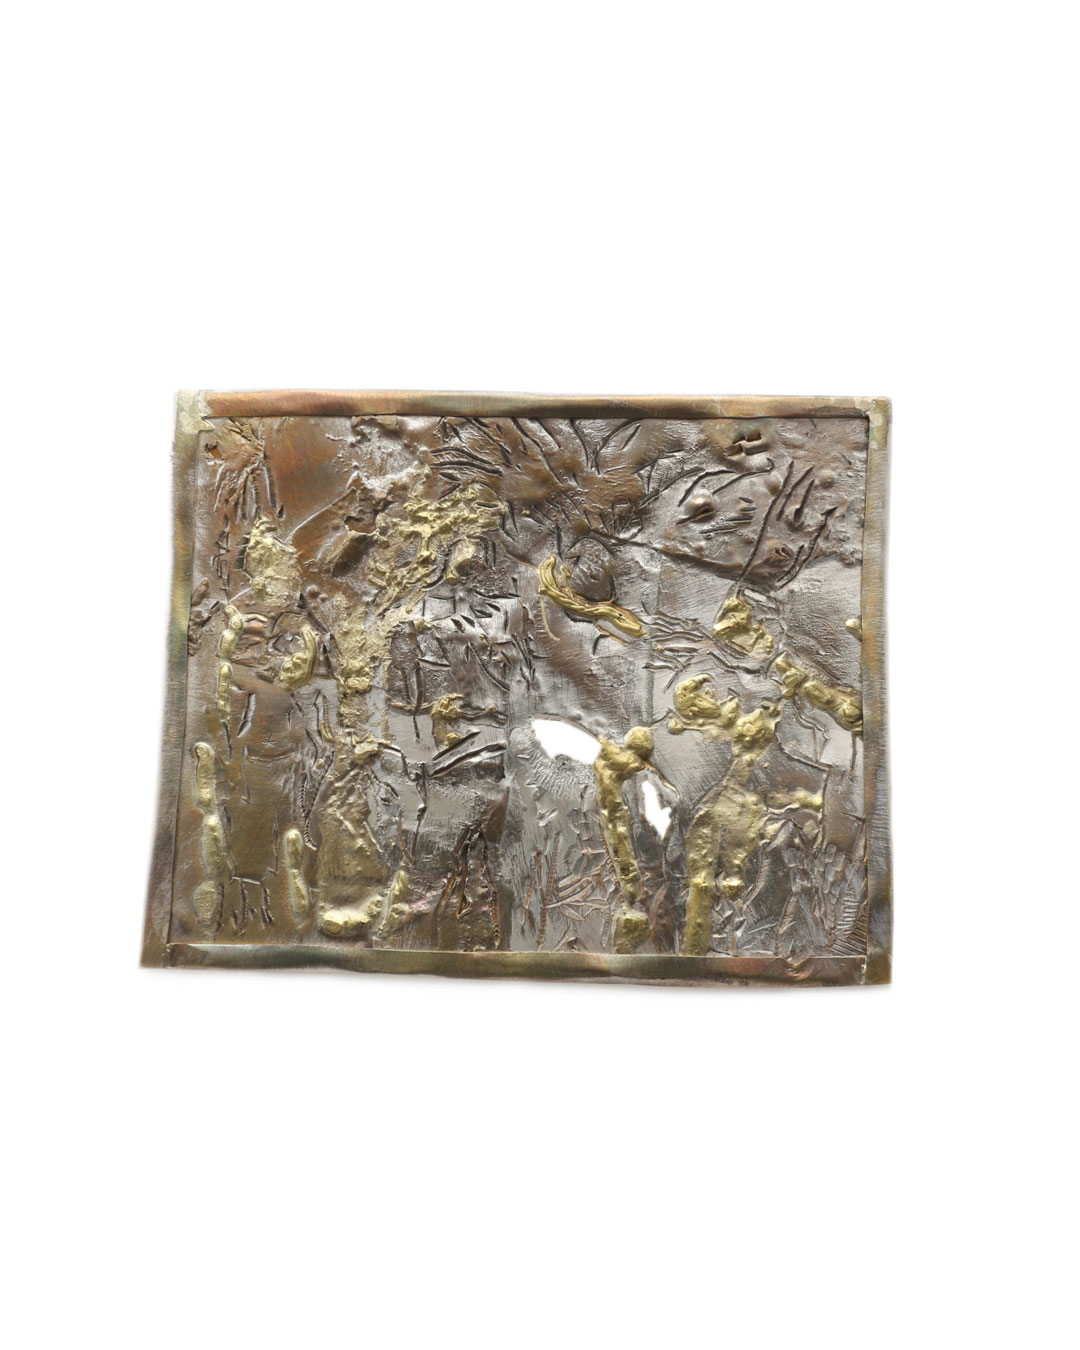 Rudolf Kocéa, Studio Olympia, 2016, brooch; silver, copper, gold, 105 x 130 mm, €2130